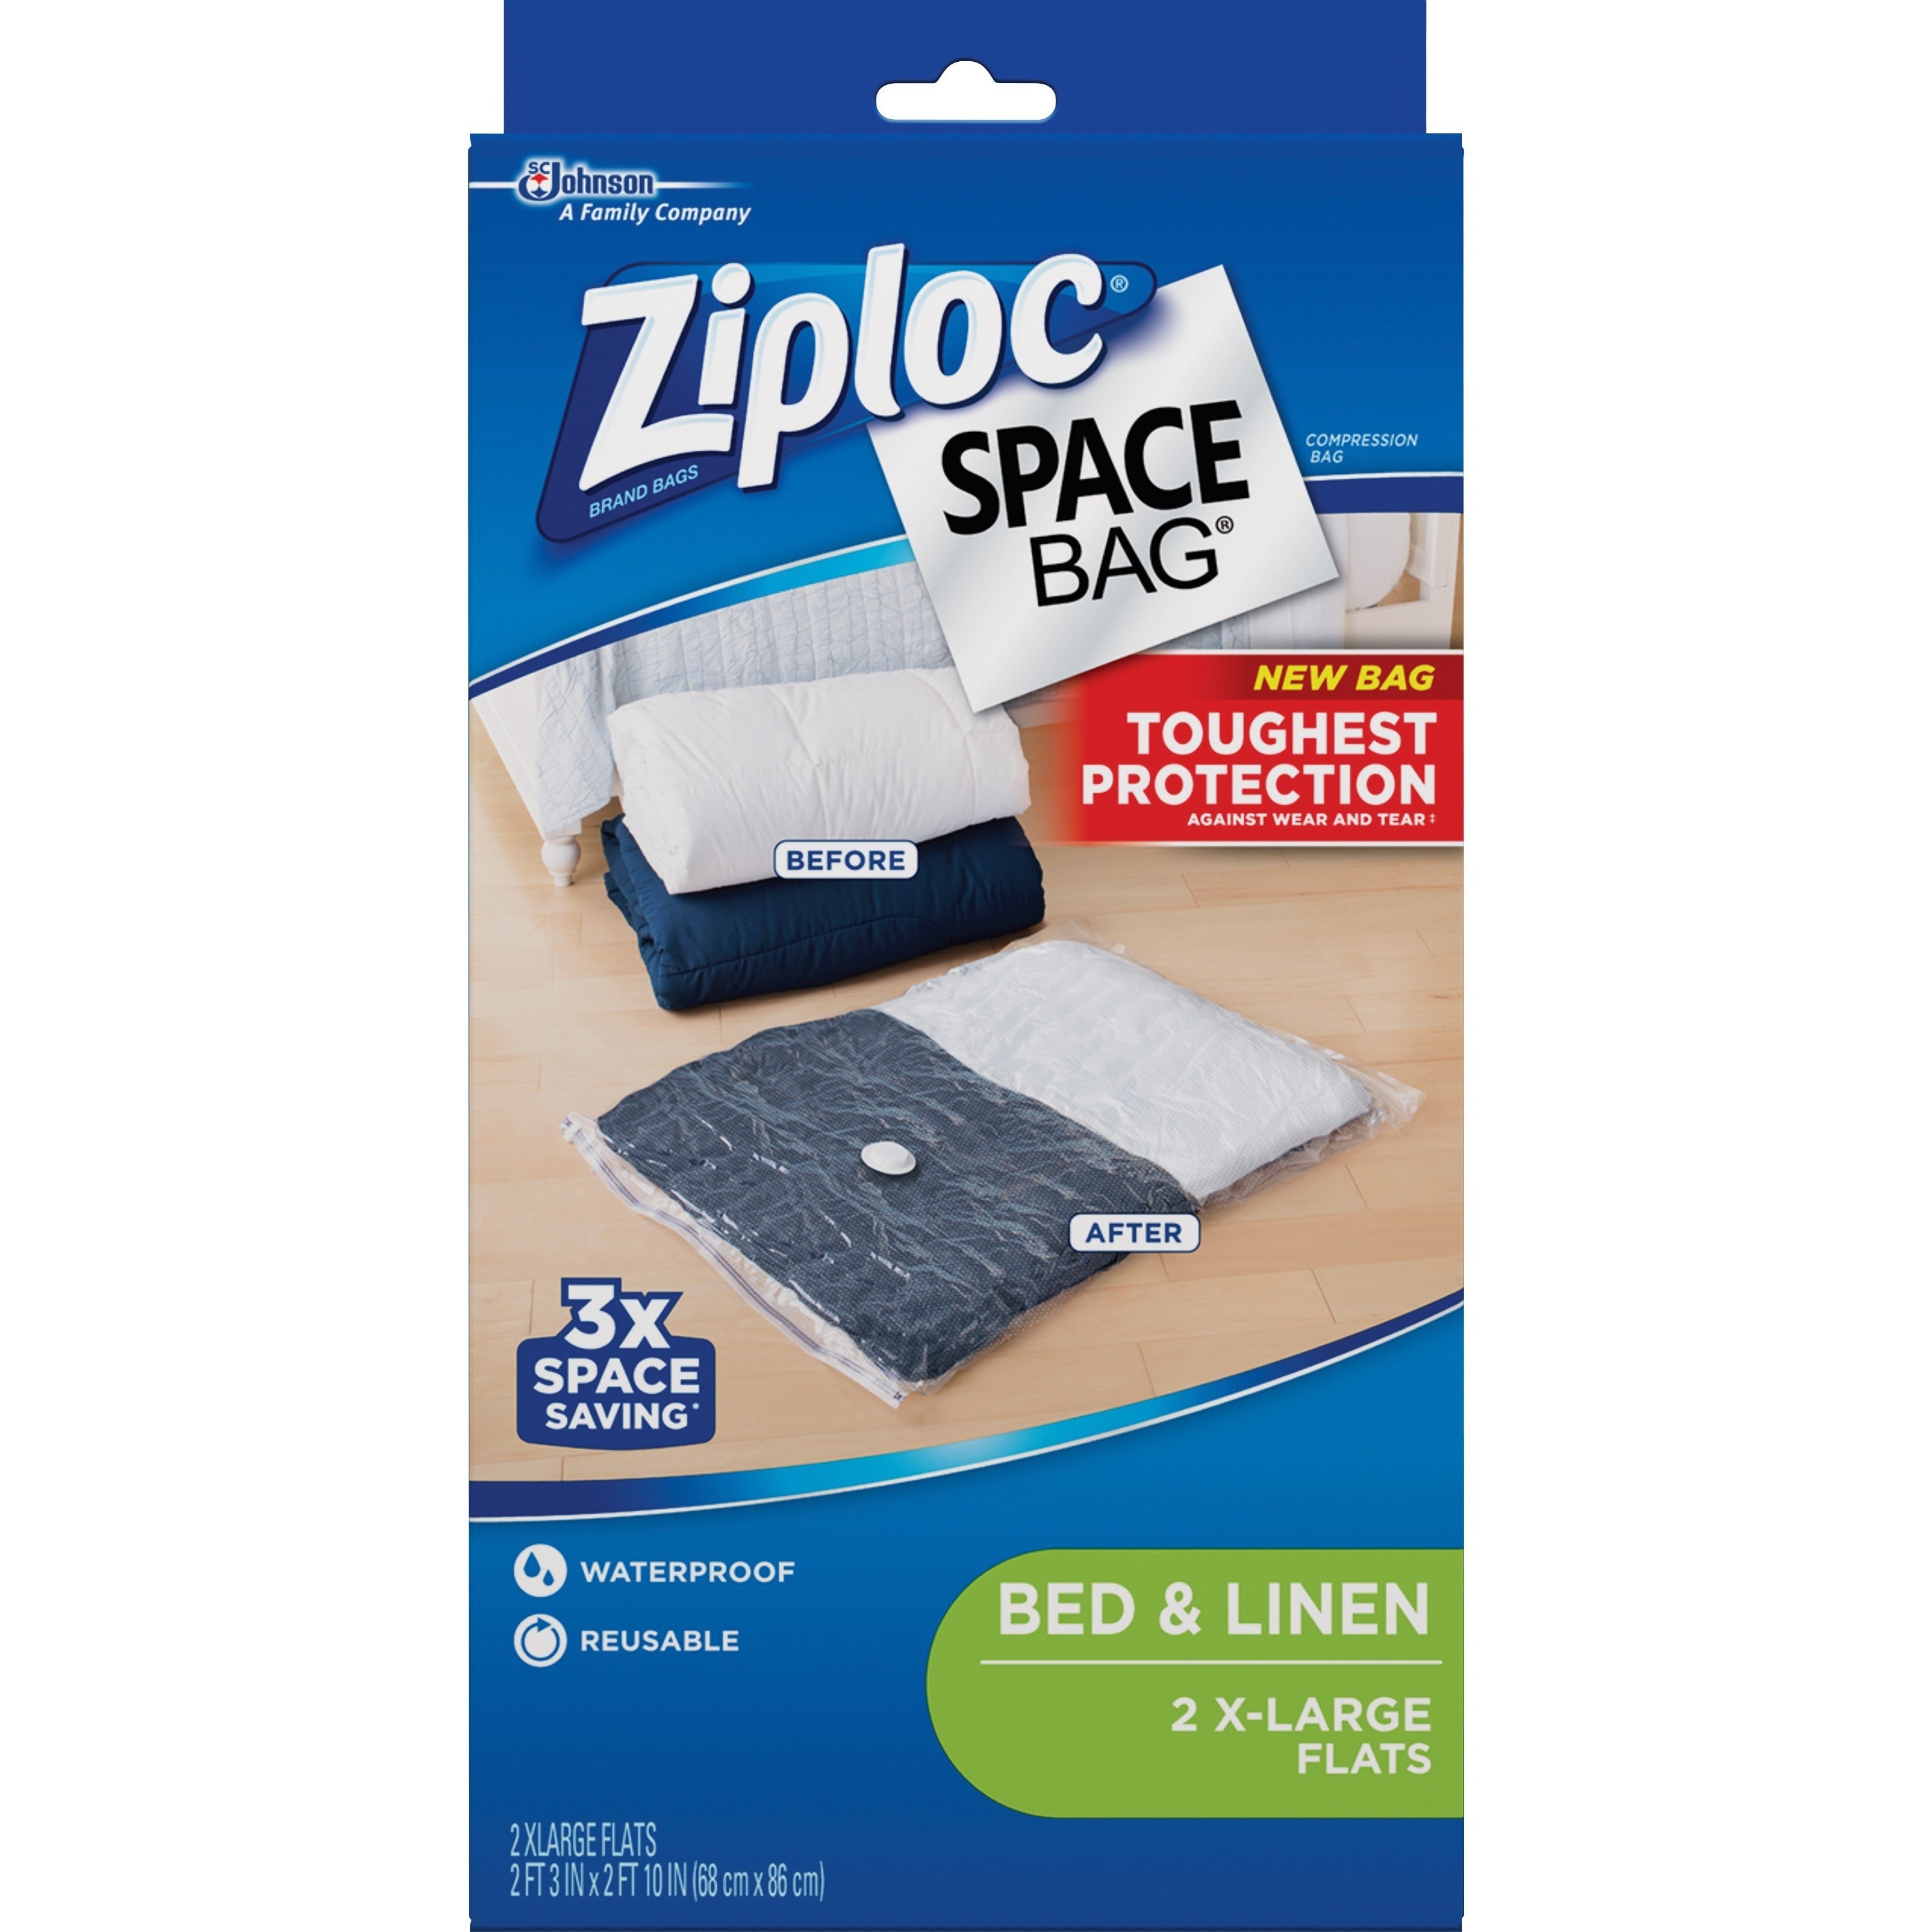 The ZipLoc vacuum seal bags